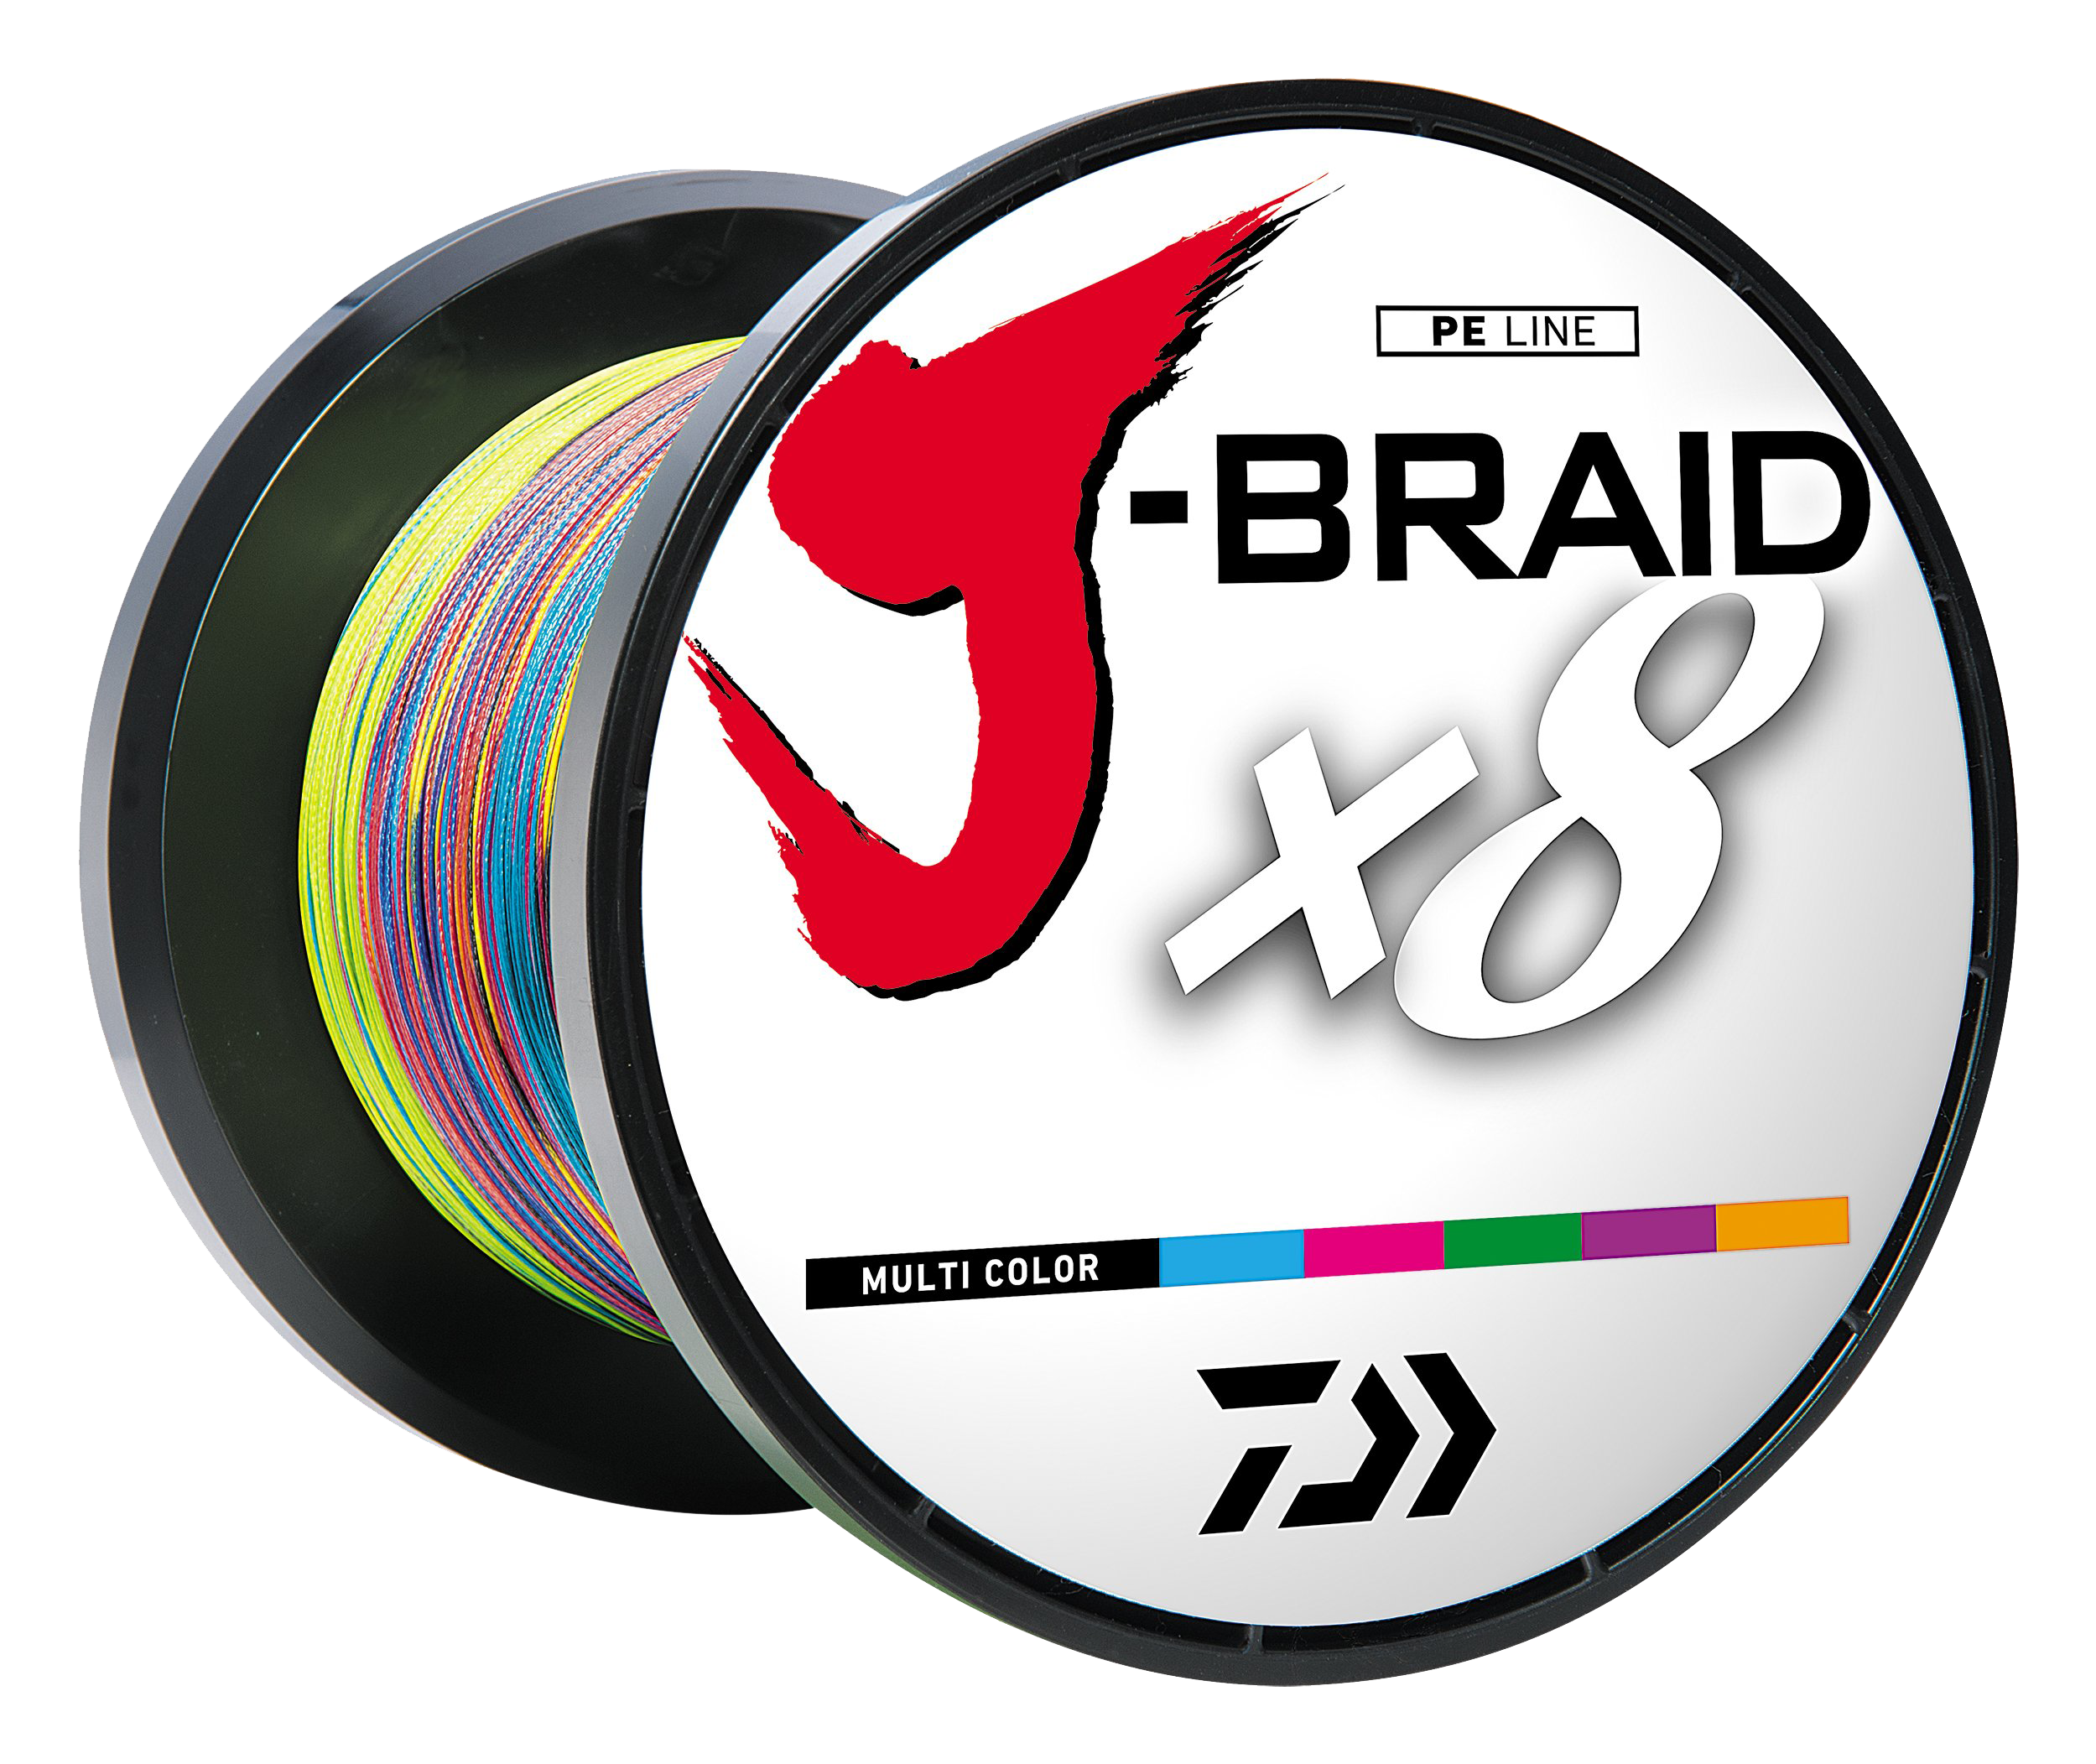 Daiwa J-Braid x4 Braided Line - Multi Color